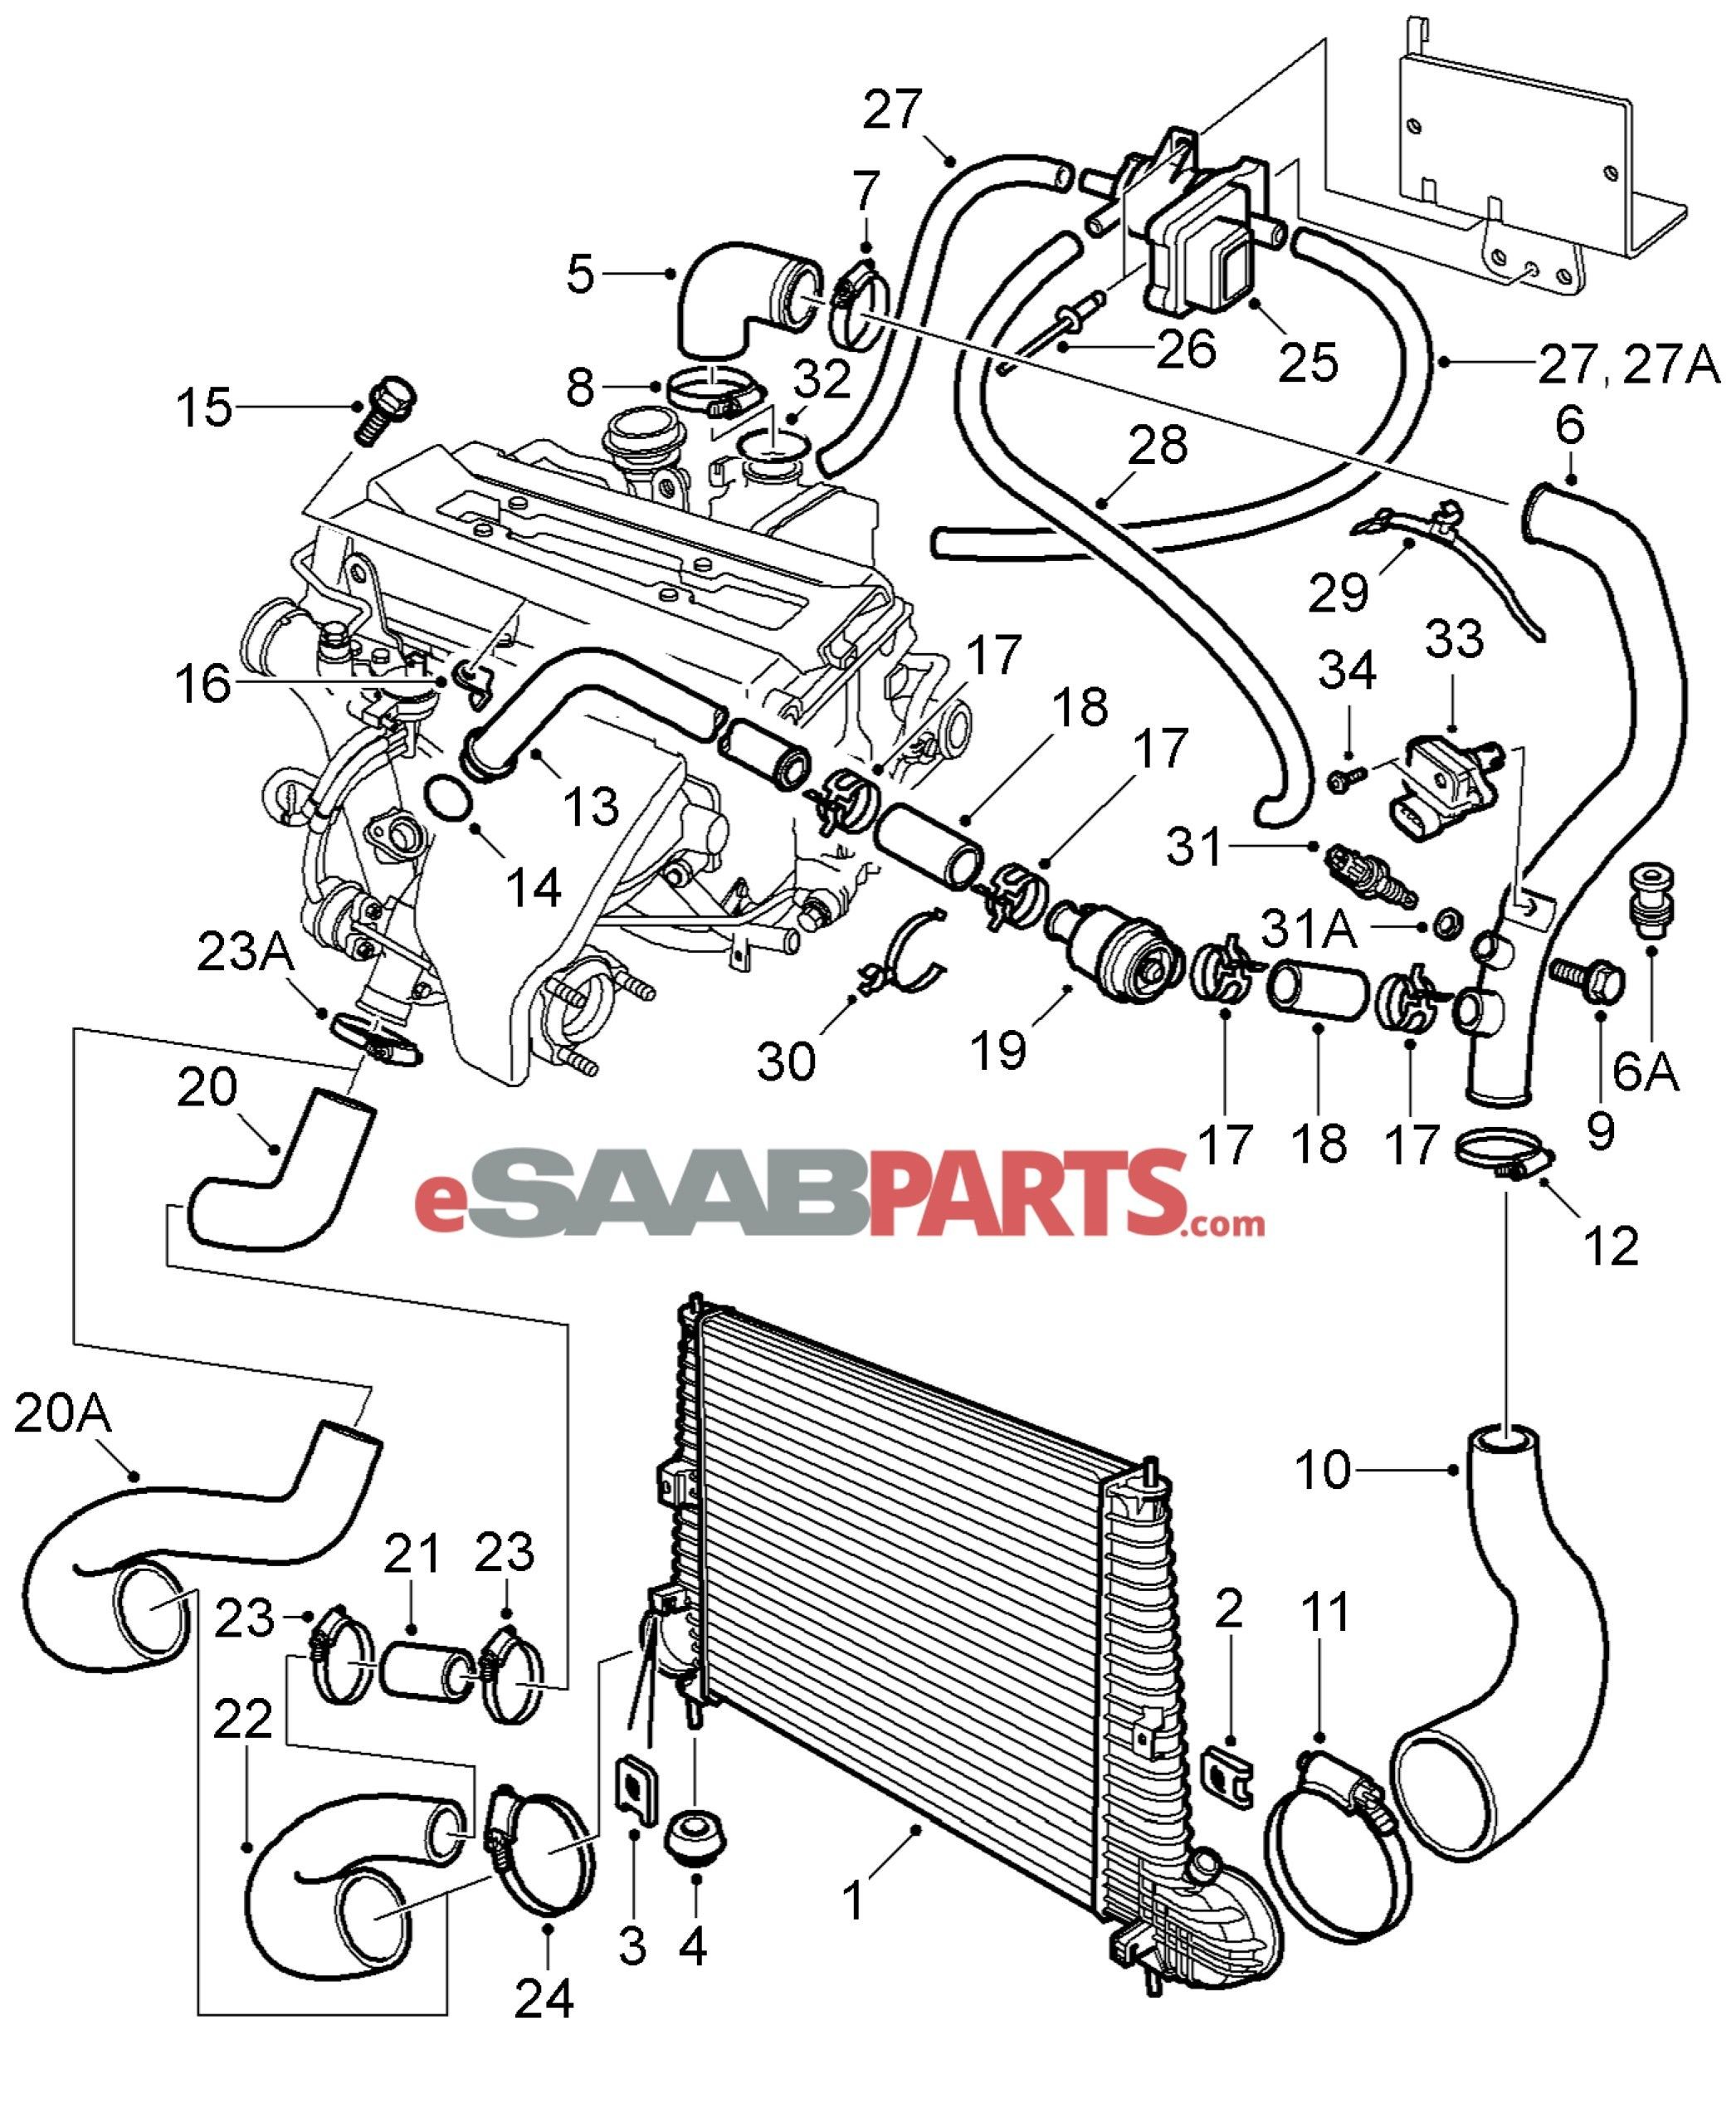 Saab 9 5 Engine Diagram Saab 9 5 Wiring Harness Diagram Wiring Diagram toolbox Of Saab 9 5 Engine Diagram